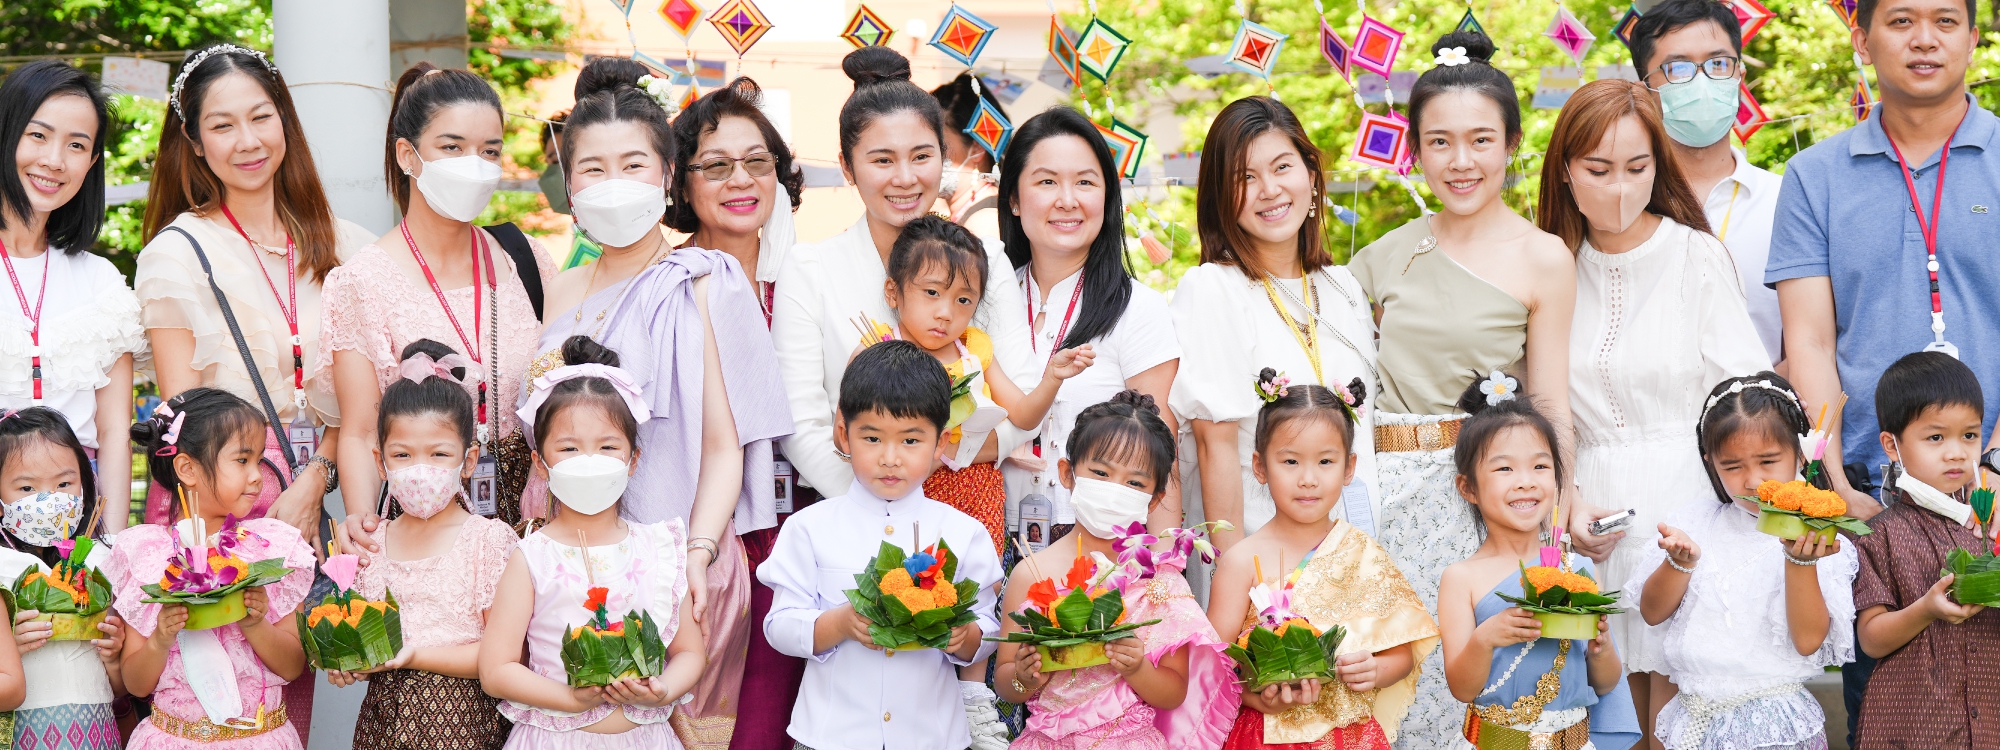 Celebrating Loy Krathong Festival at King’s Bangkok